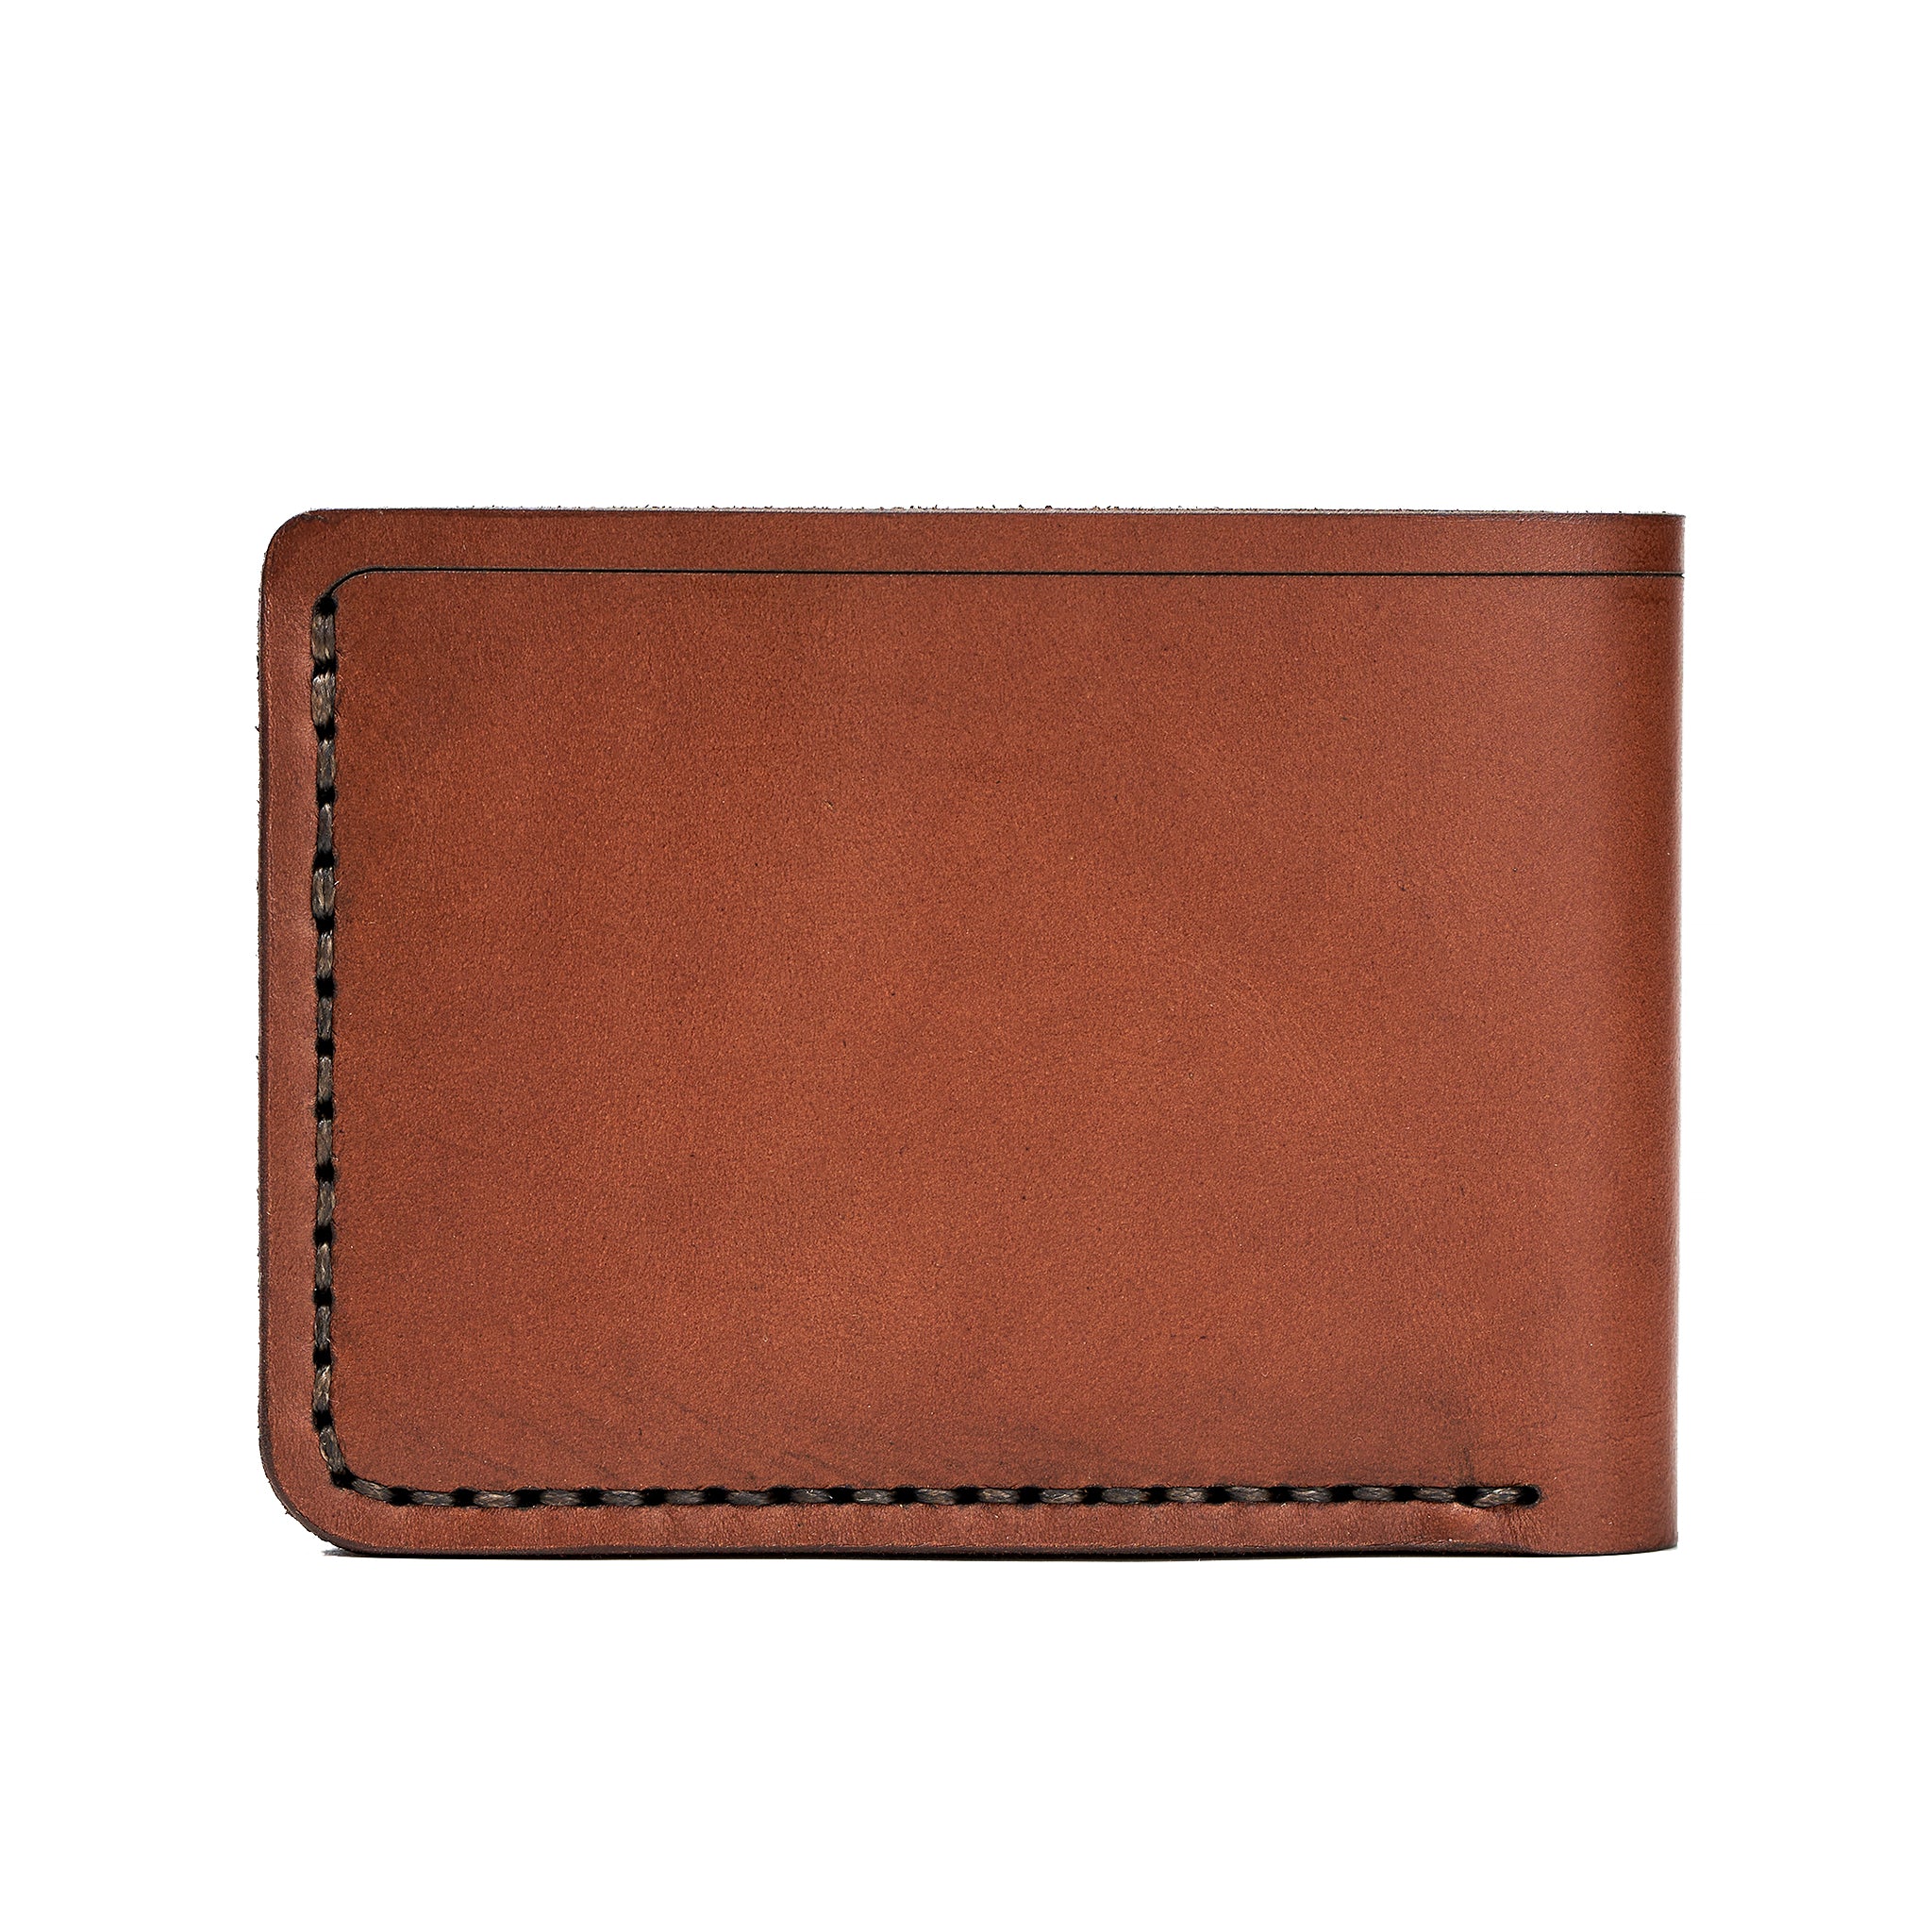 Handmade Men's Wallet 4 Card Slots Whisky 31707851849879